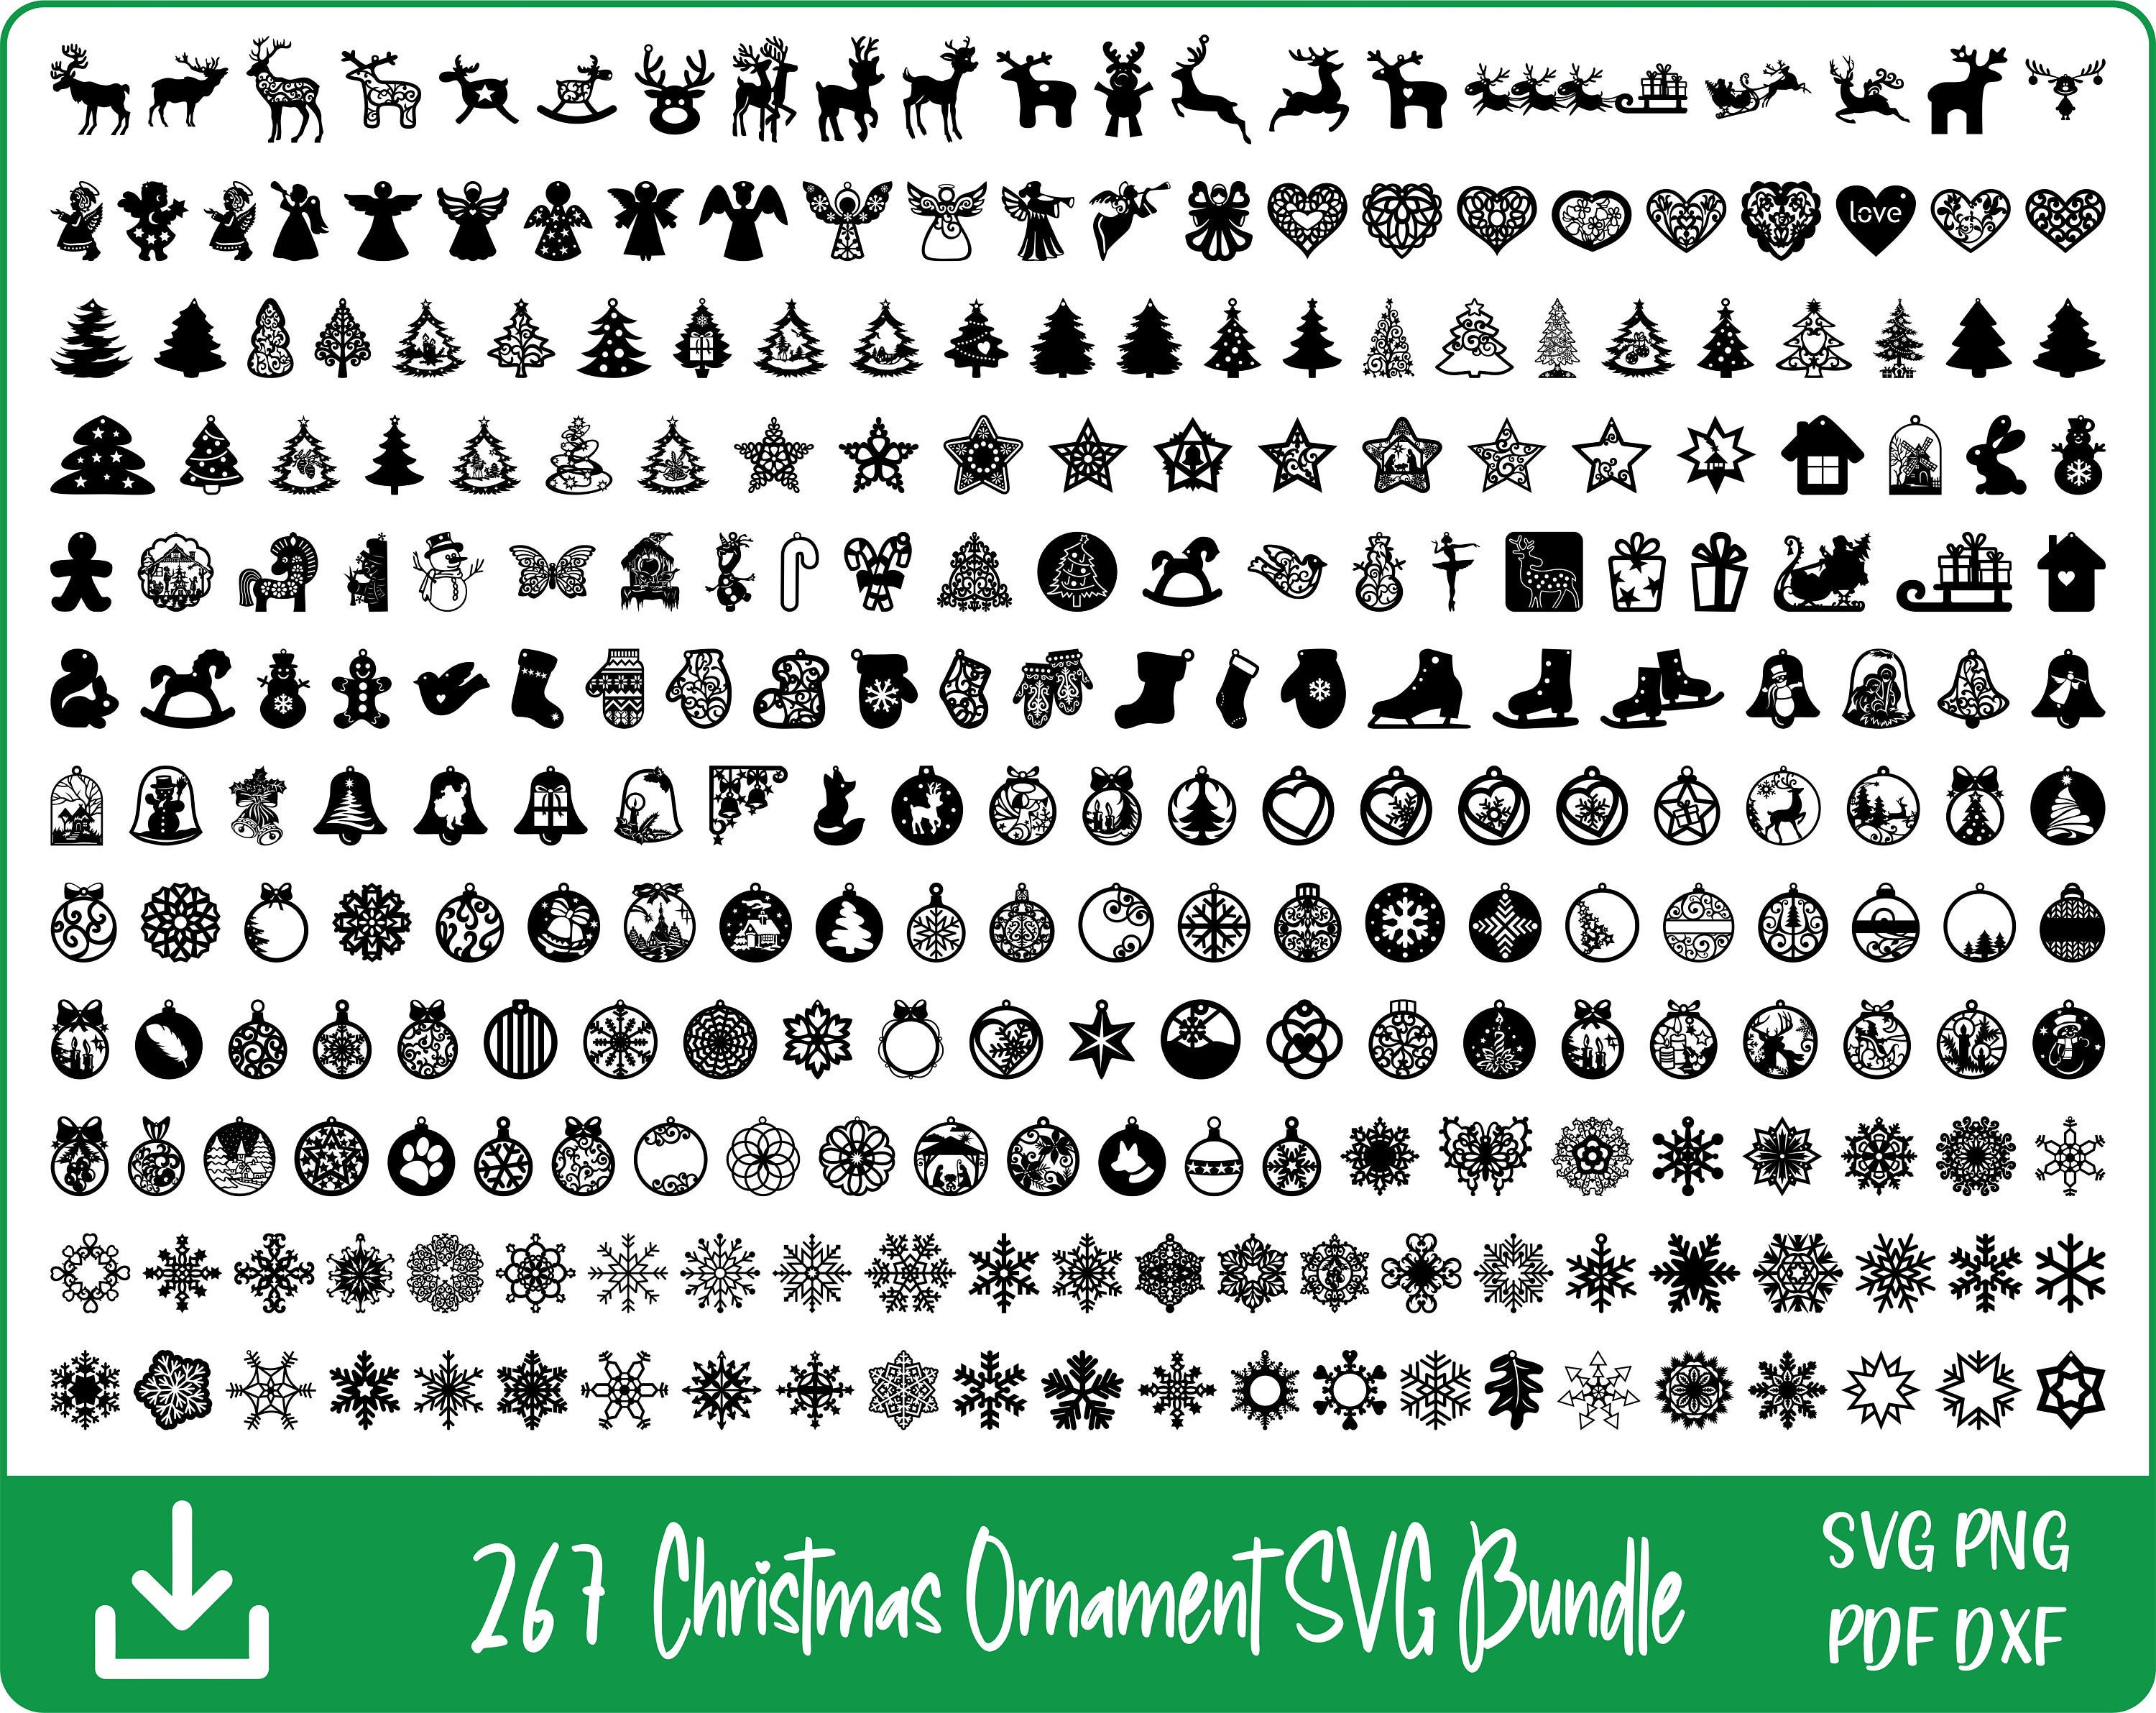 267 Christmas Ornament SVG Bundle, Tree Ornament SVG File, Christmas Decor Cut Files, Round Christmas Ornaments SVG, Glowforge Christmas svg